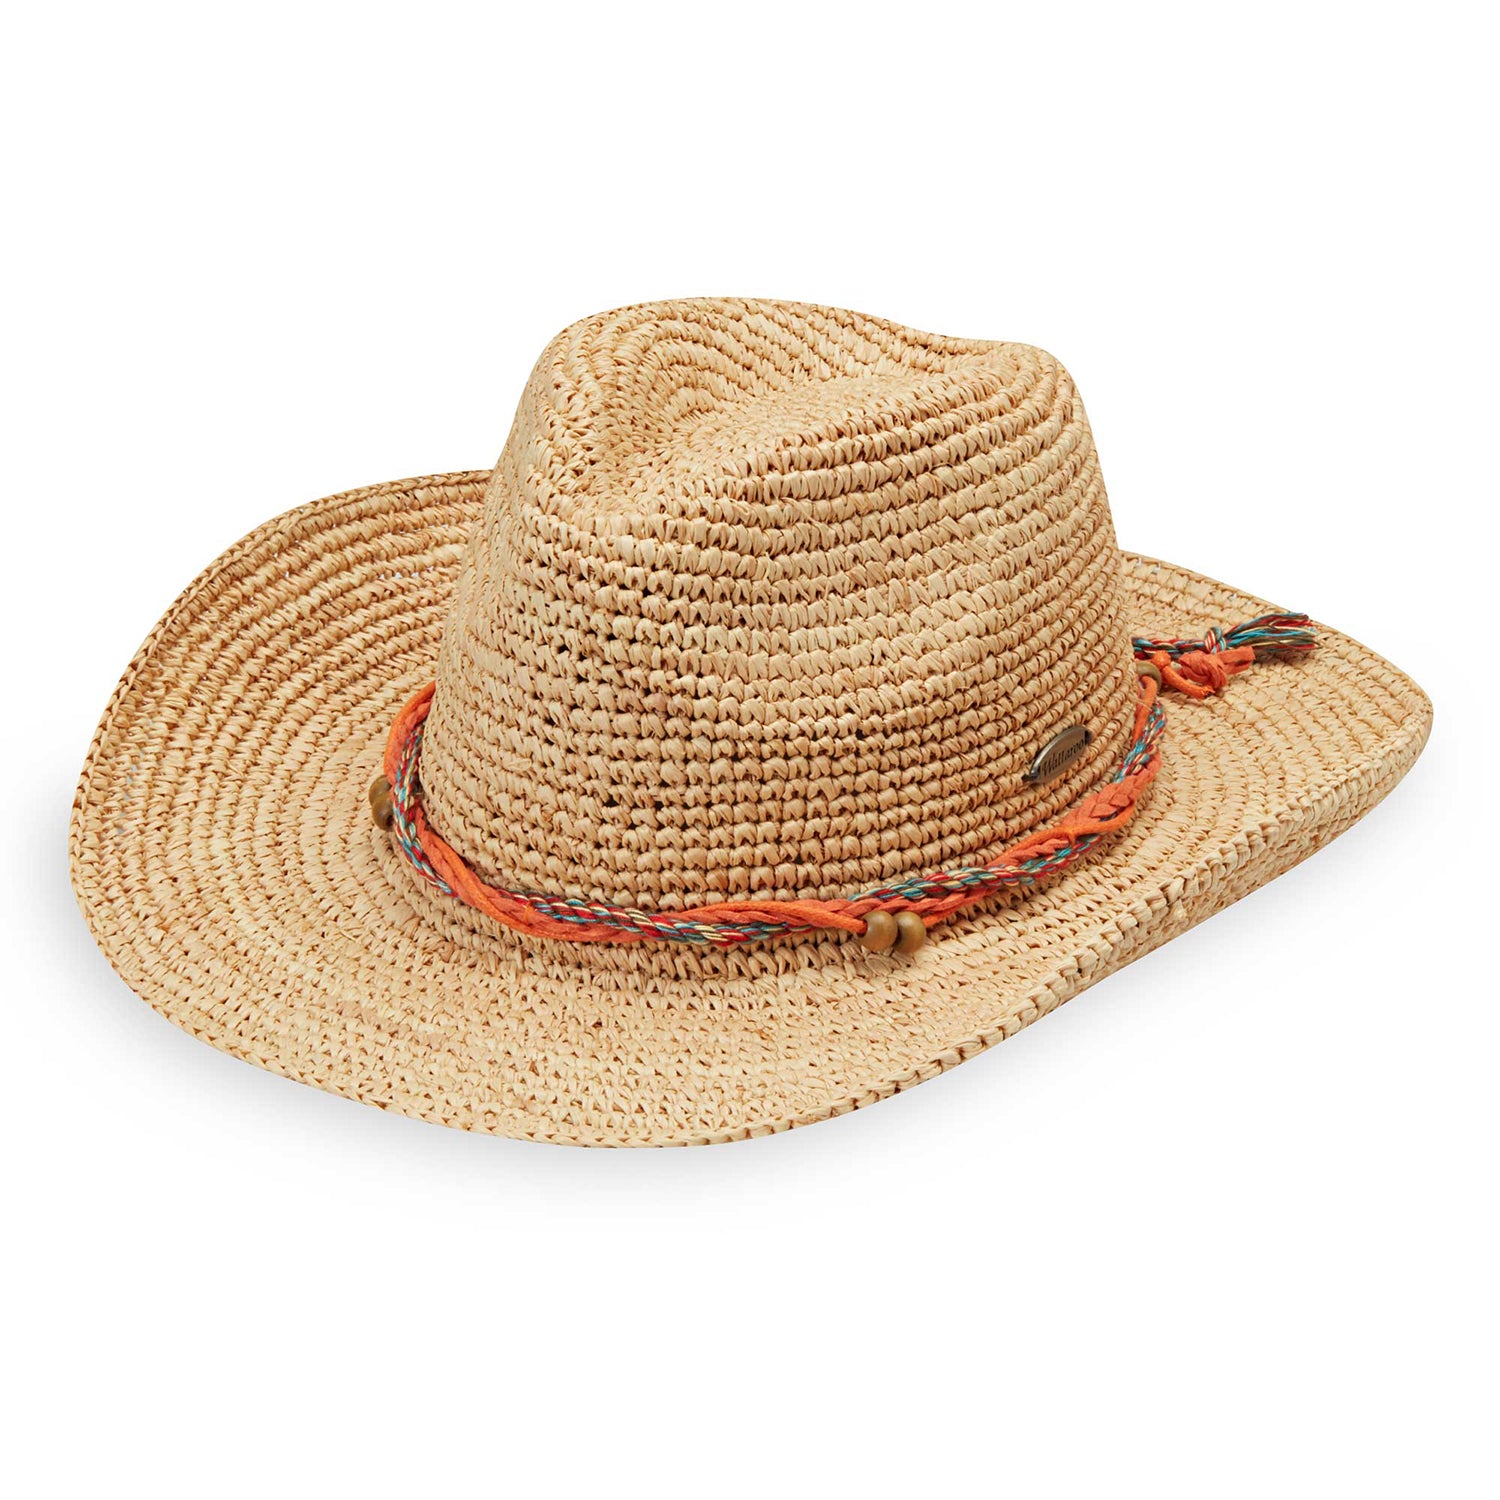 Featuring Women's petite catalina cowboy sun hat by Wallaroo made from natural raffia fiber 